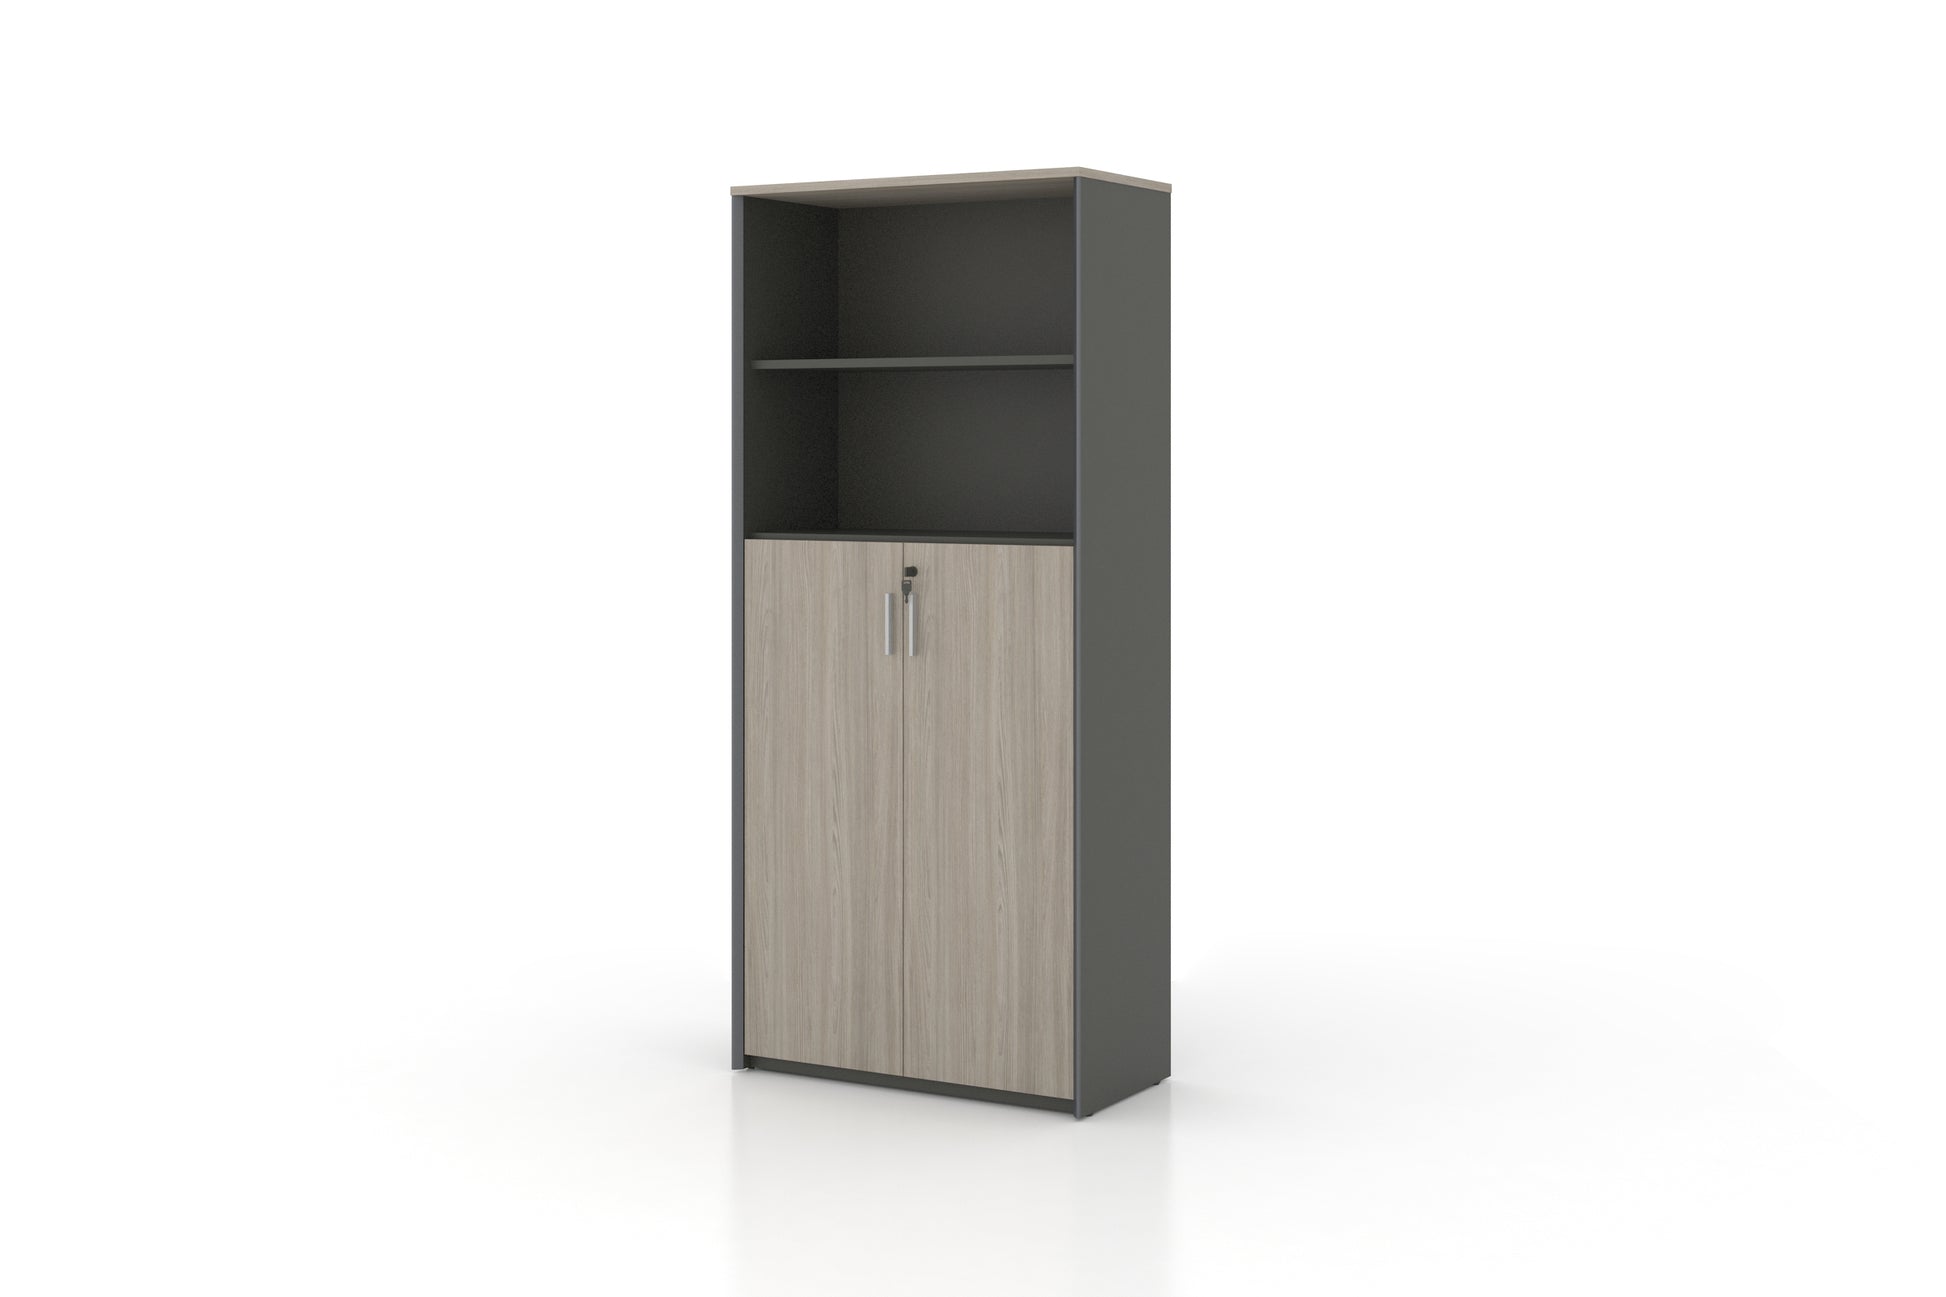 Universal 5-Level Cabinet (Meteor Grey Body) Consumer KANO CF41 Nash Oak Upper Shelves are Open 8-10 Weeks